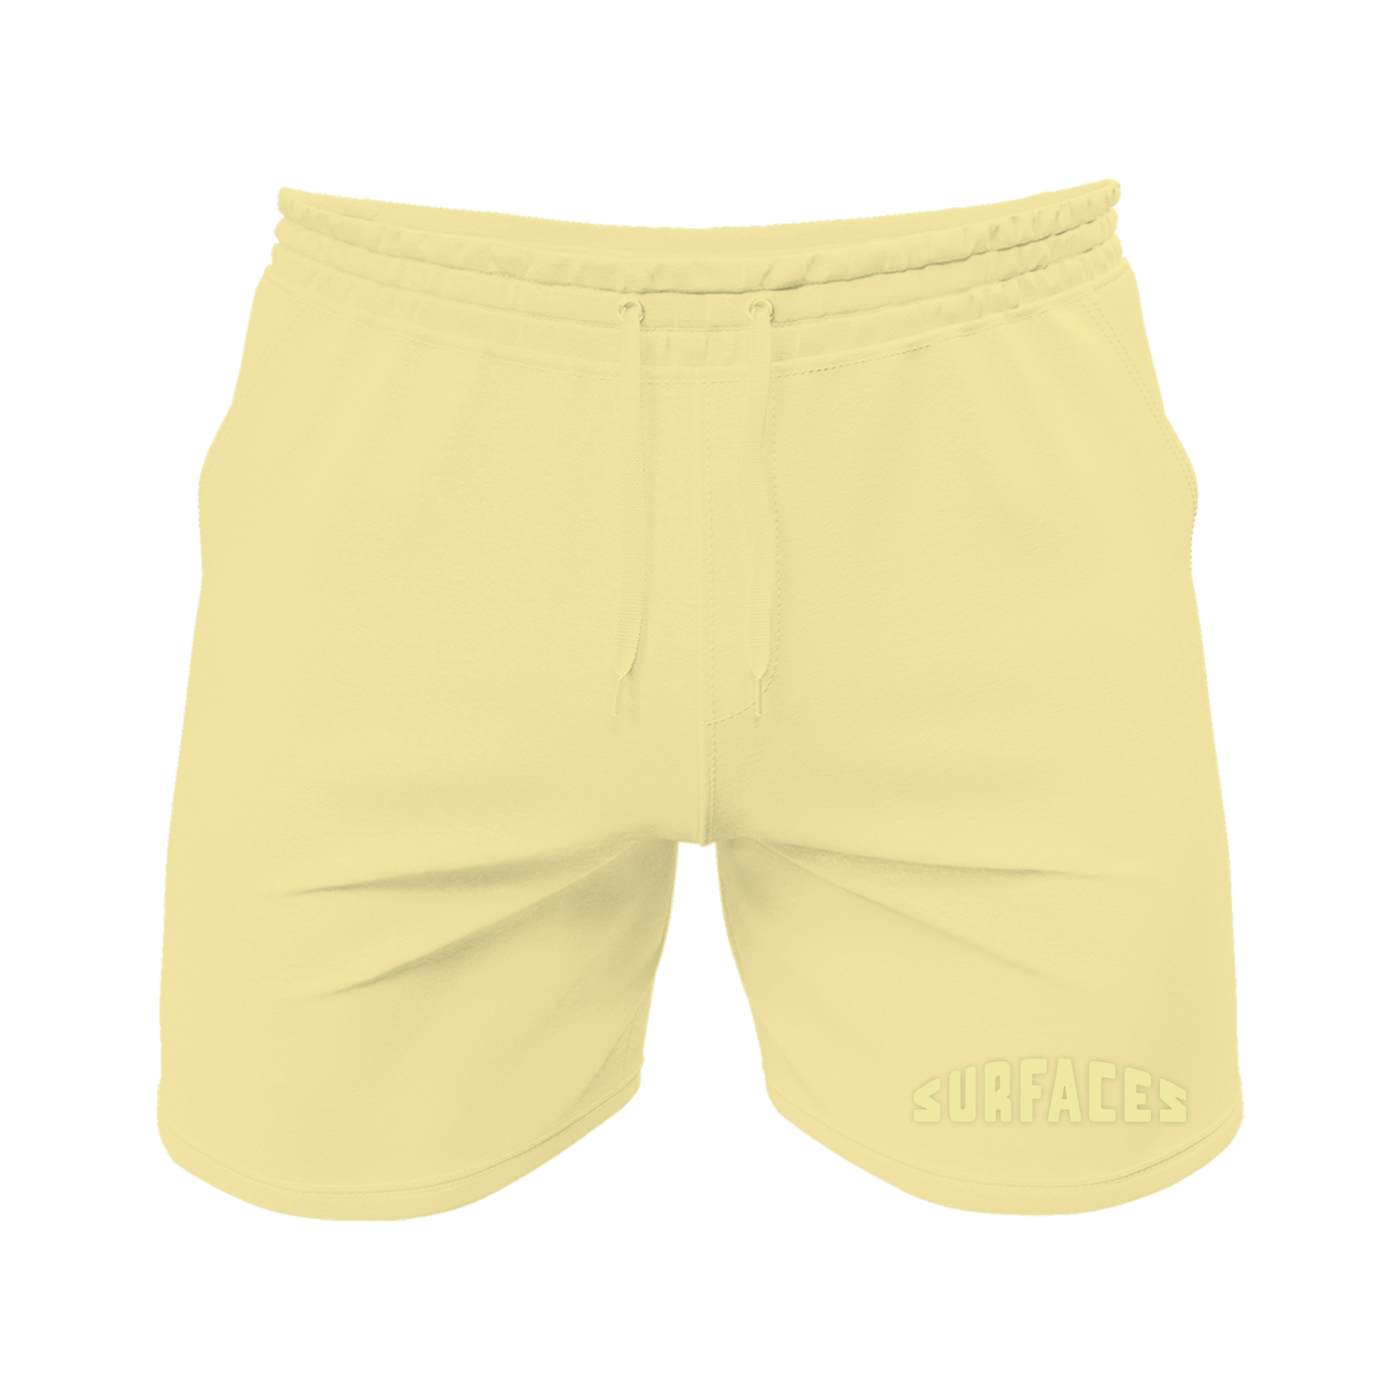 Surfaces So Far Away Yellow Shorts